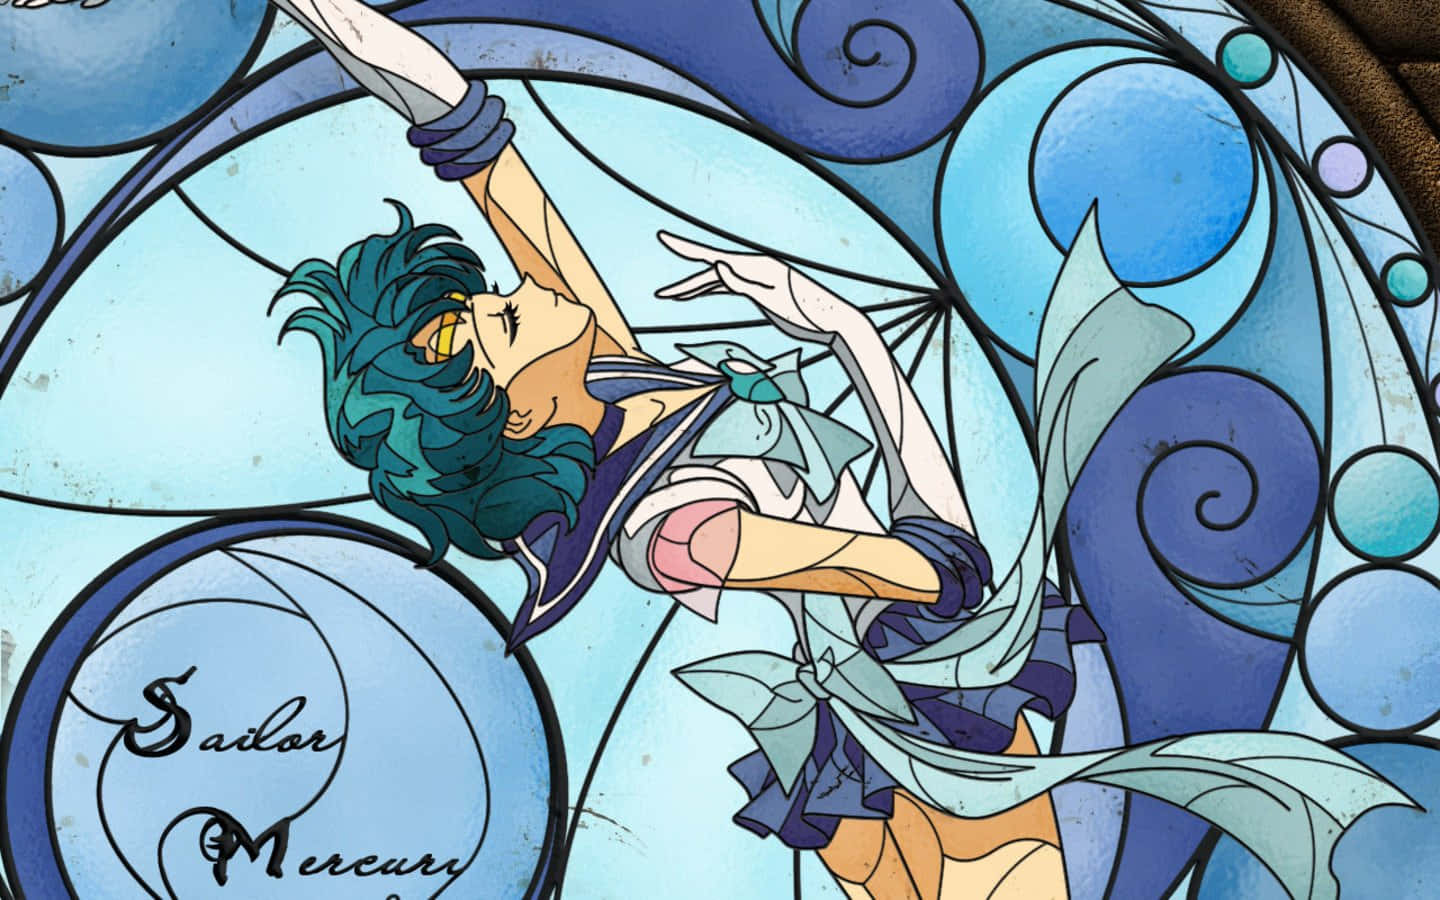 The Captivating Sailor Mercury Wallpaper